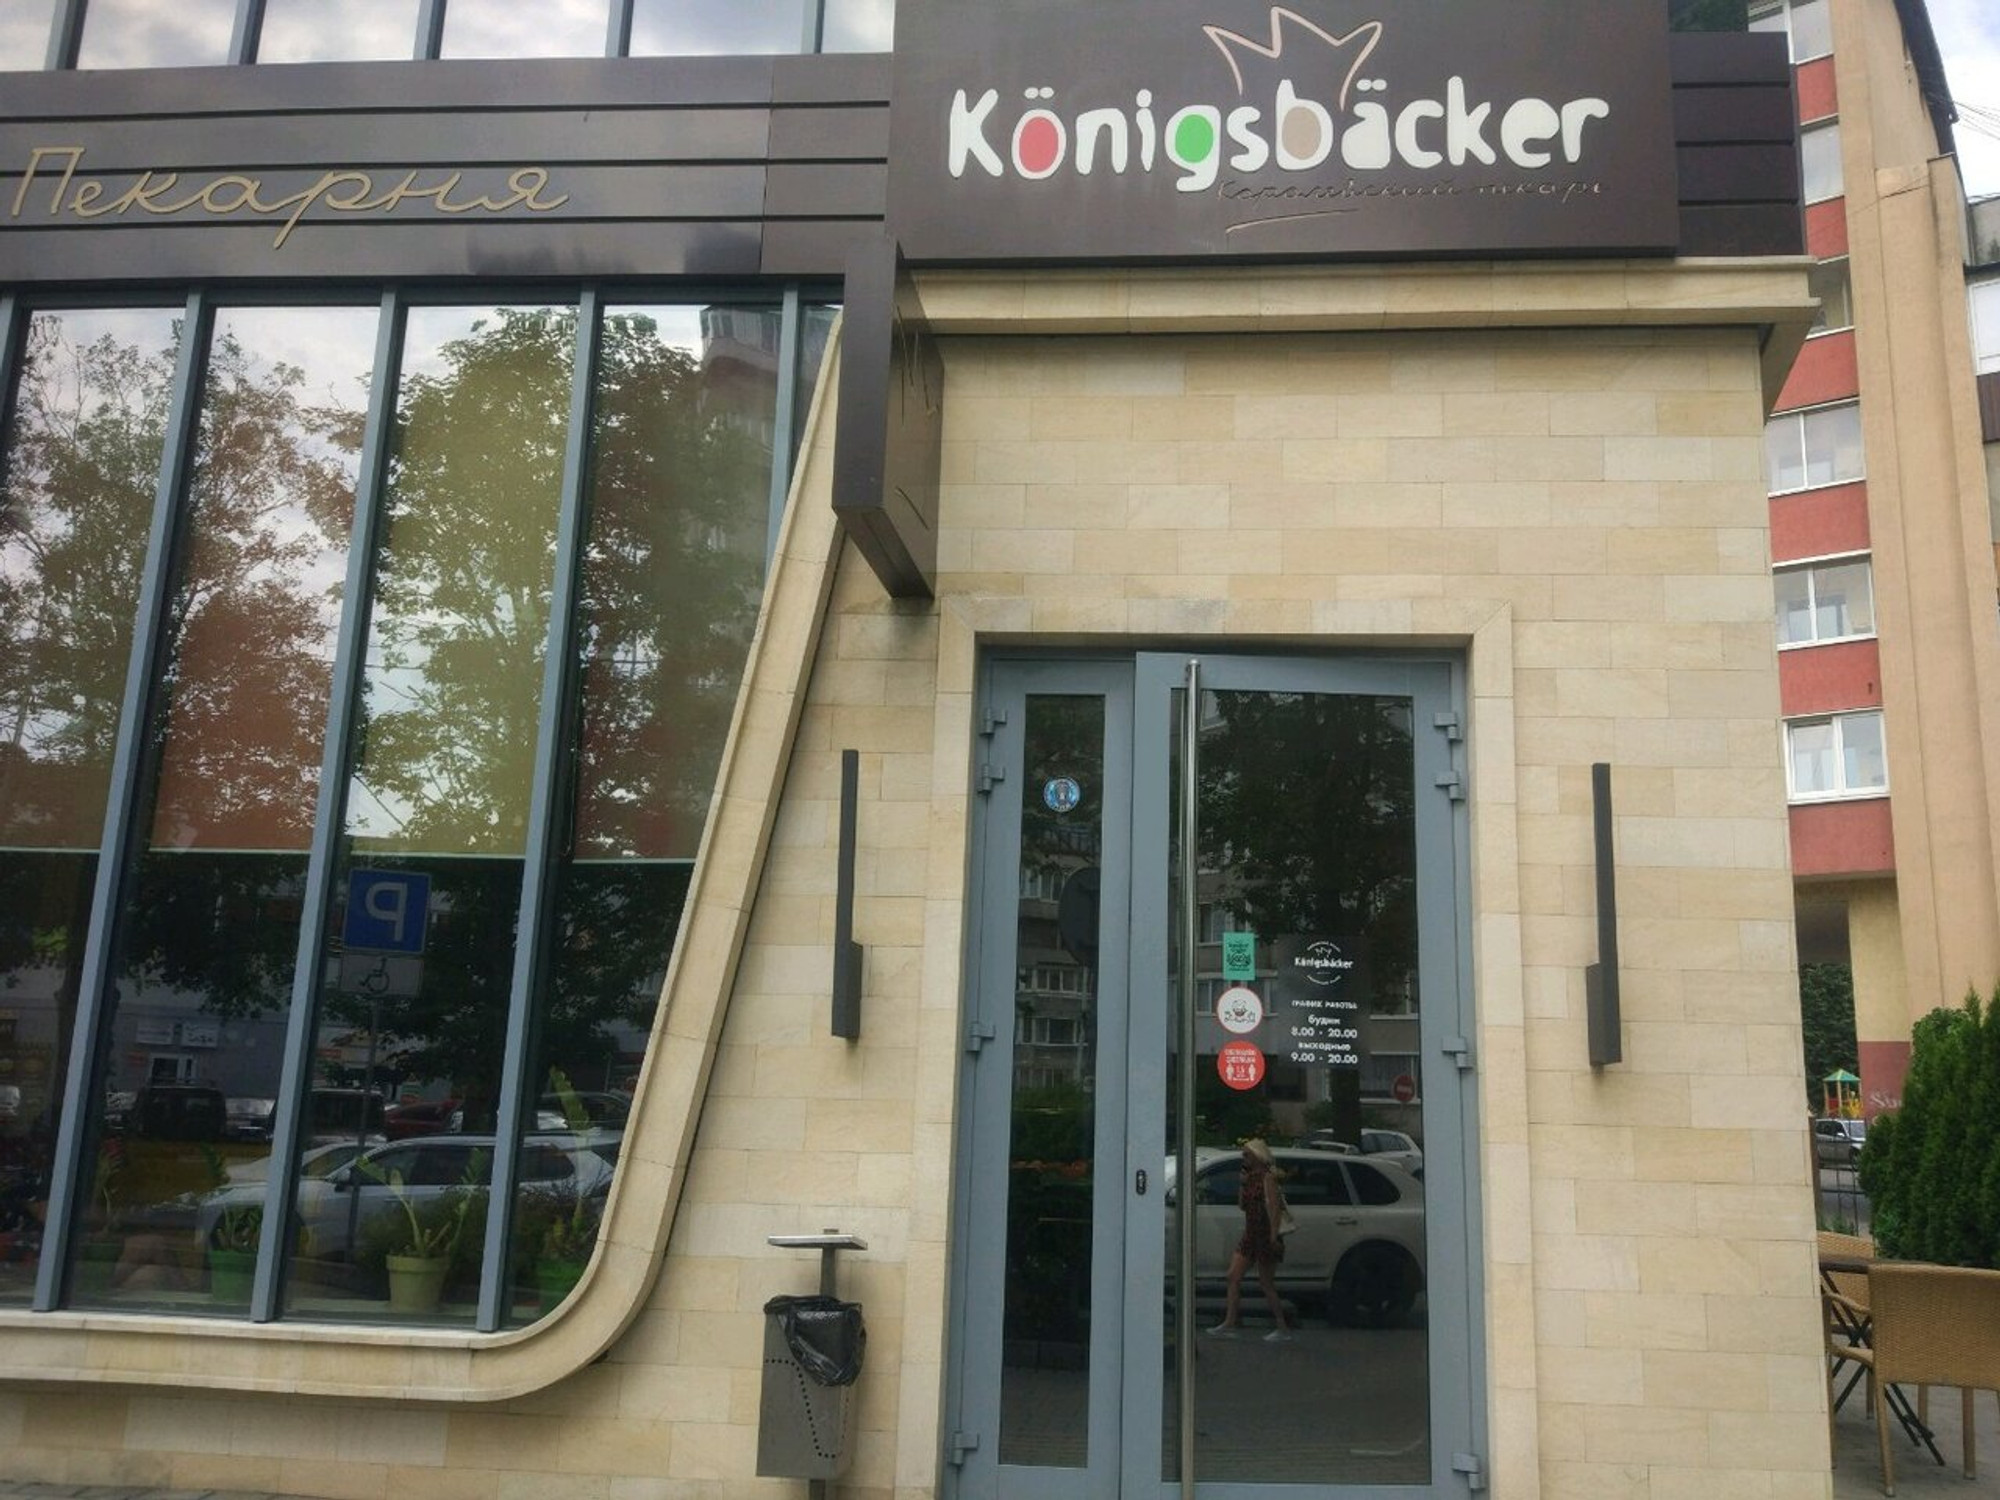 Konigsbacker (Булочная, пекарня )